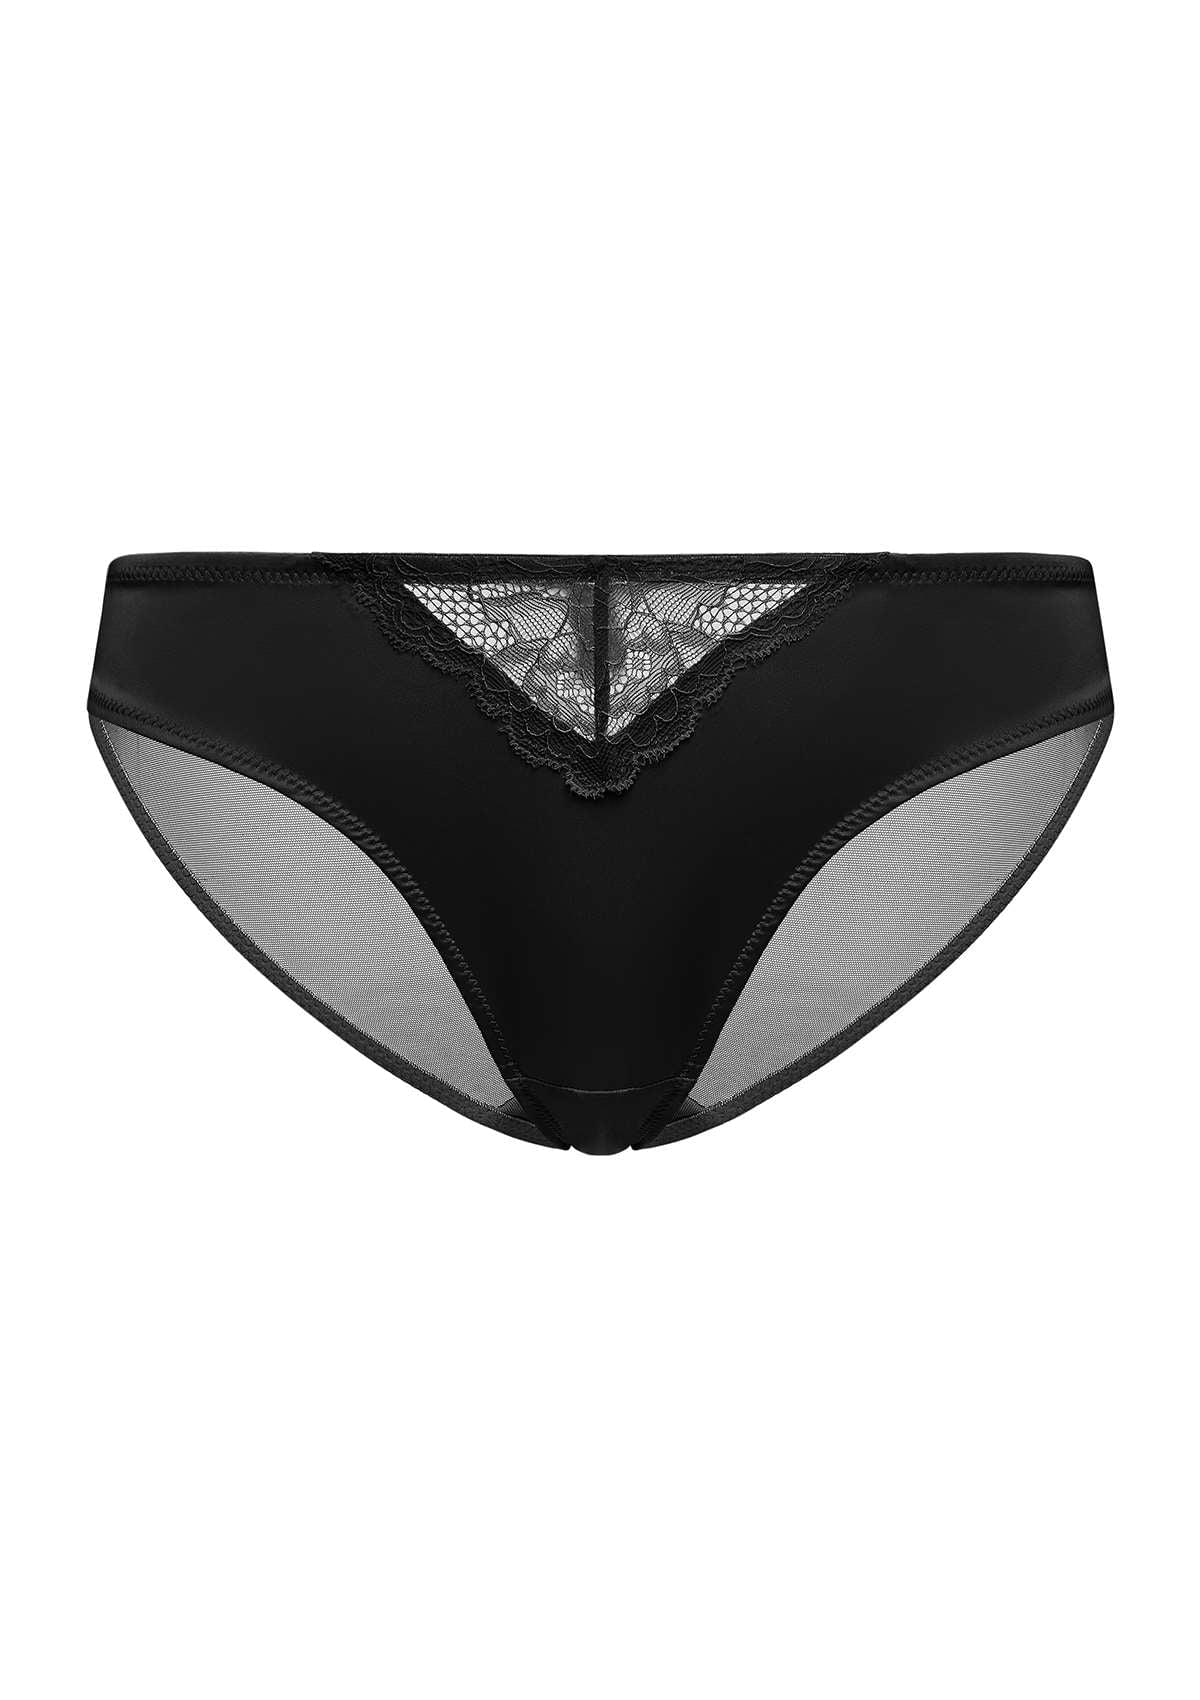 HSIA Foxy Satin Soft Low-Rise Mesh Lace-Trimmed Elegant Underwear - S / Black